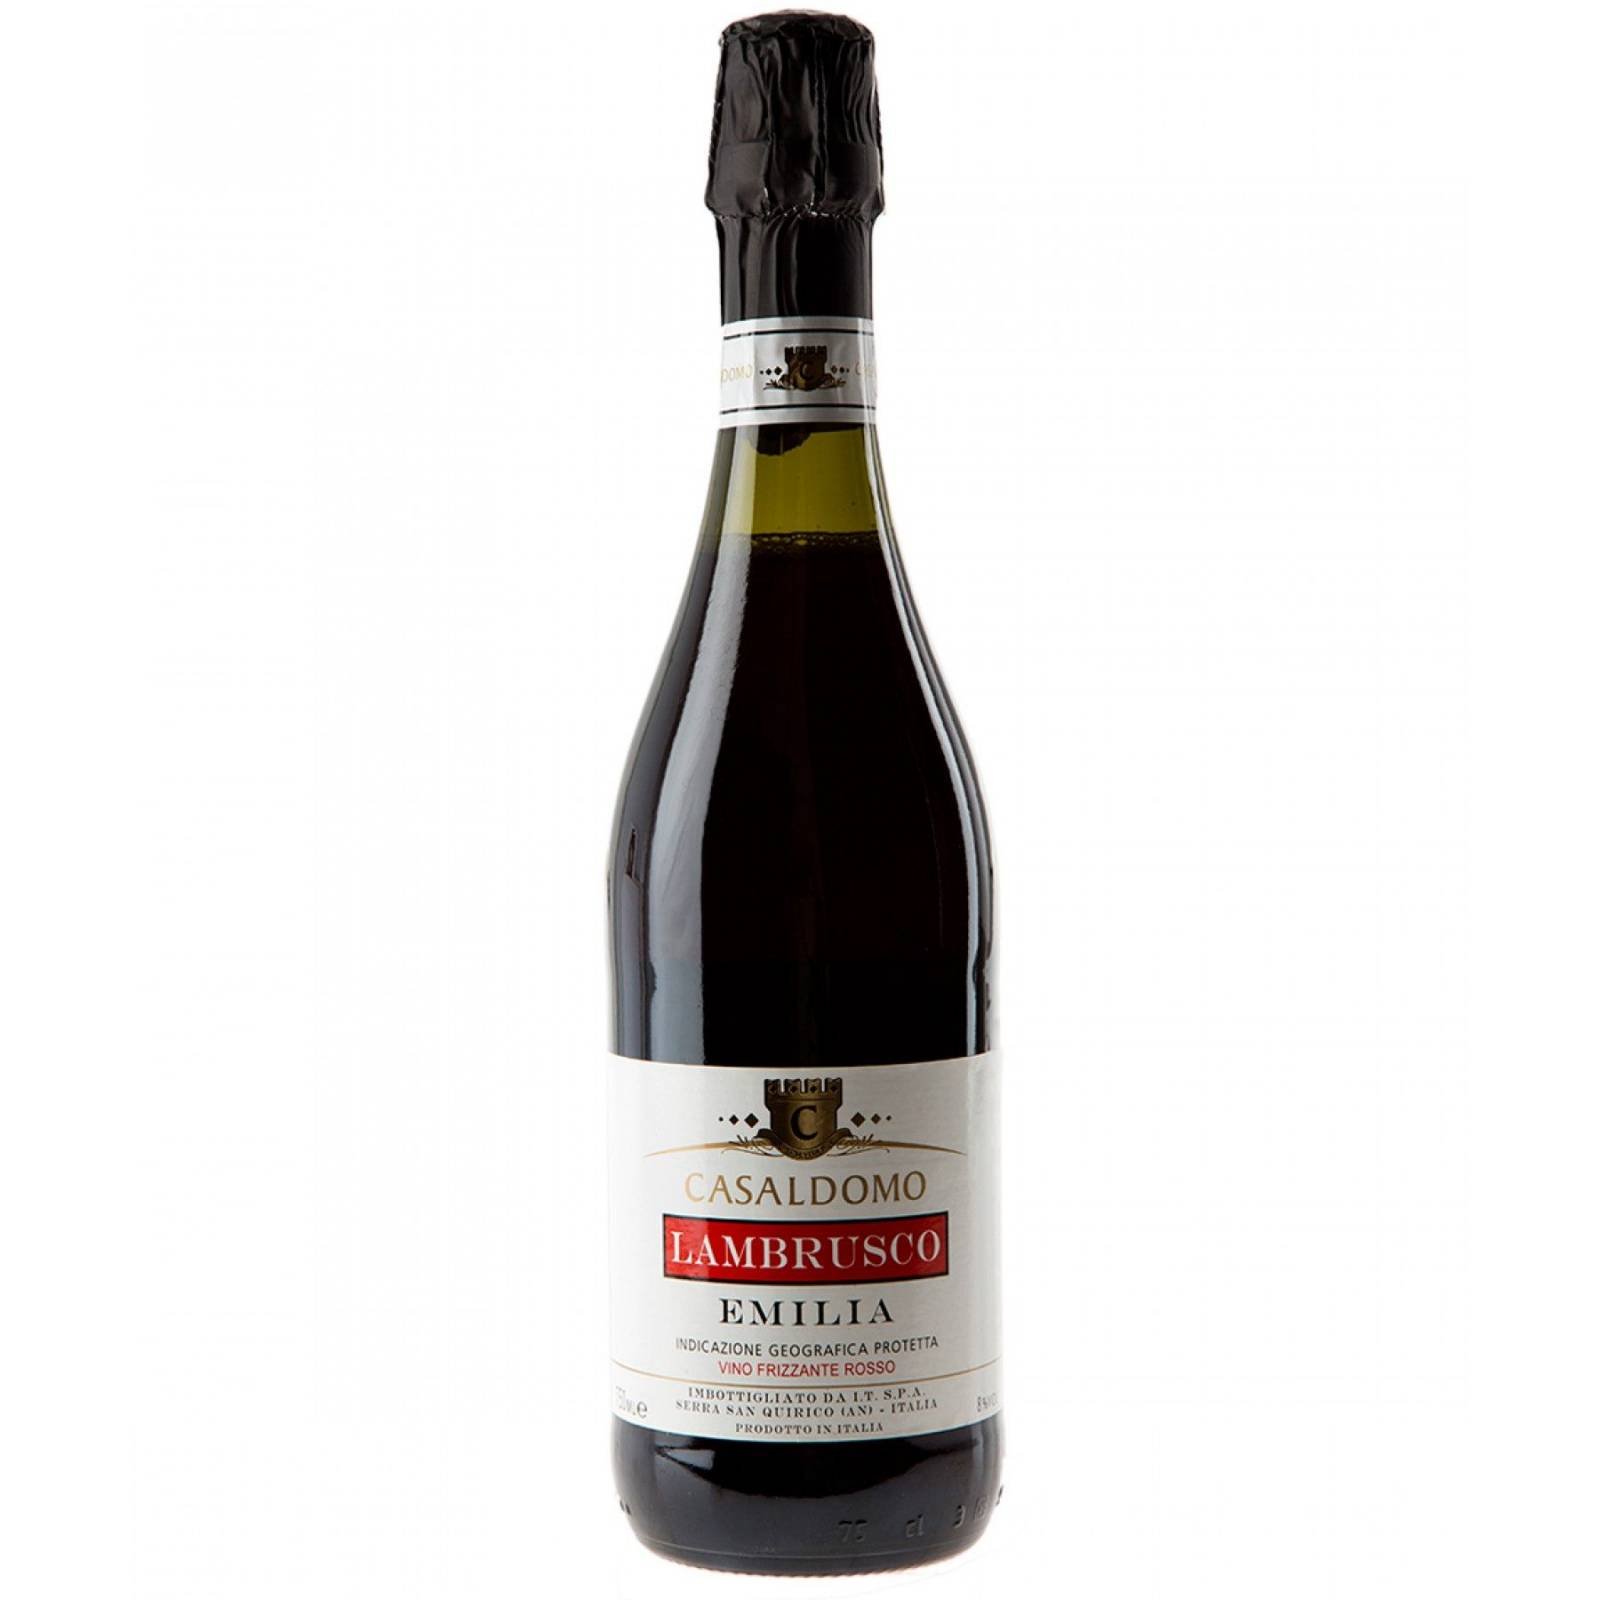 Maria lambrusco. Вино Lambrusco Emilia. Риуните Ламбруско красное и белое. Красное игристое вино Lambrusco.